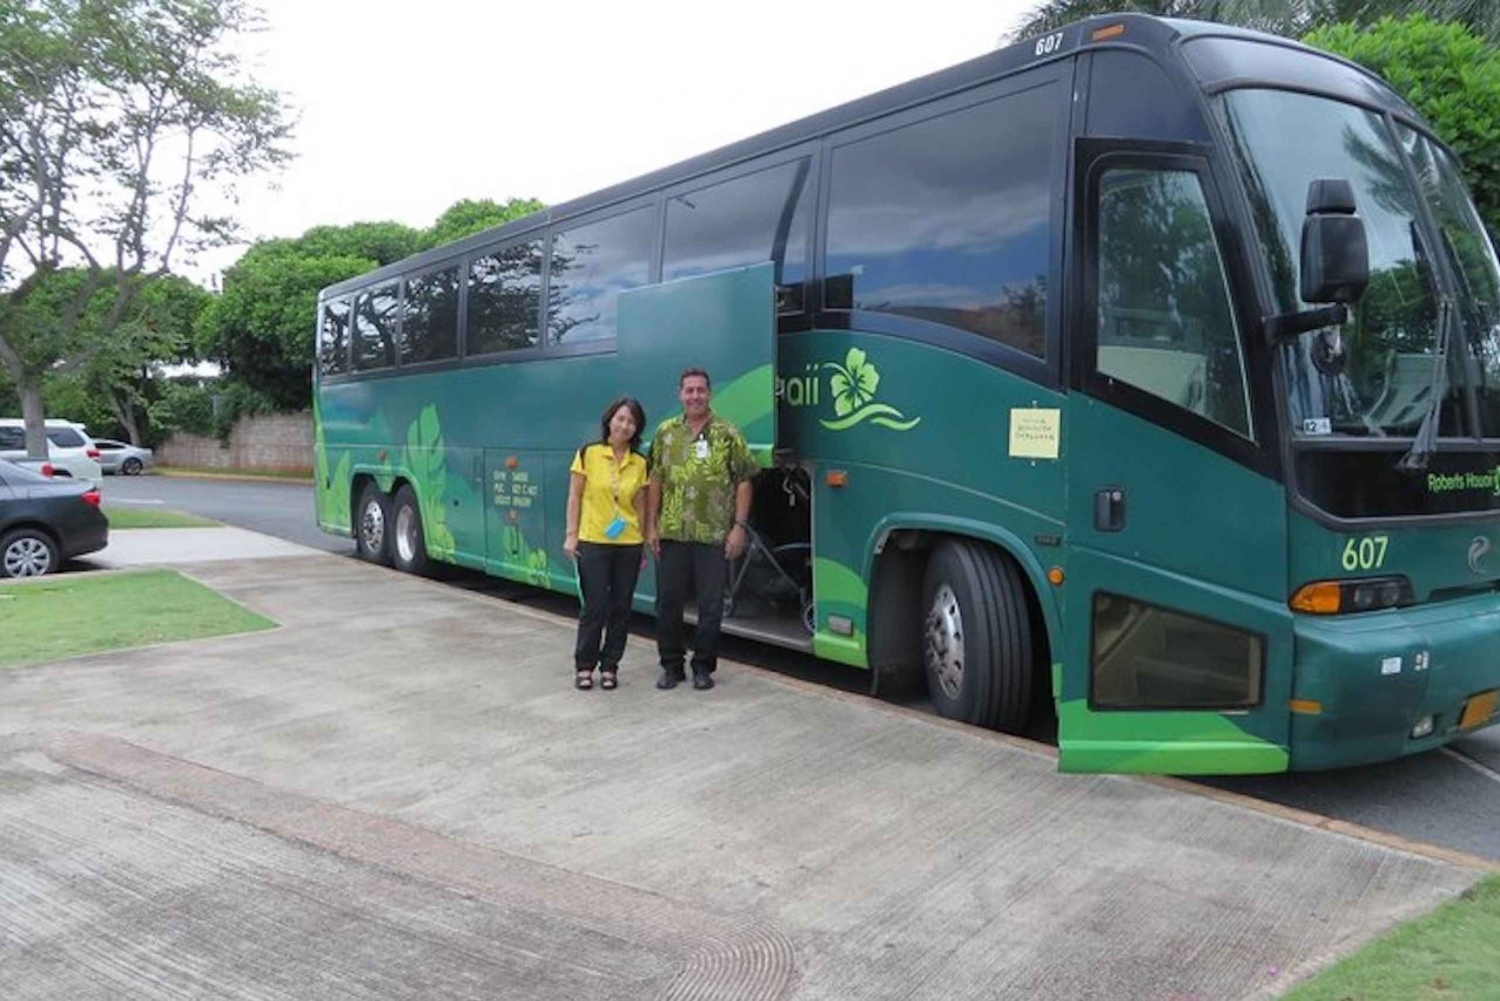 Oahu: Waikele Premium Outlets Roundtrip Bus From Waikiki